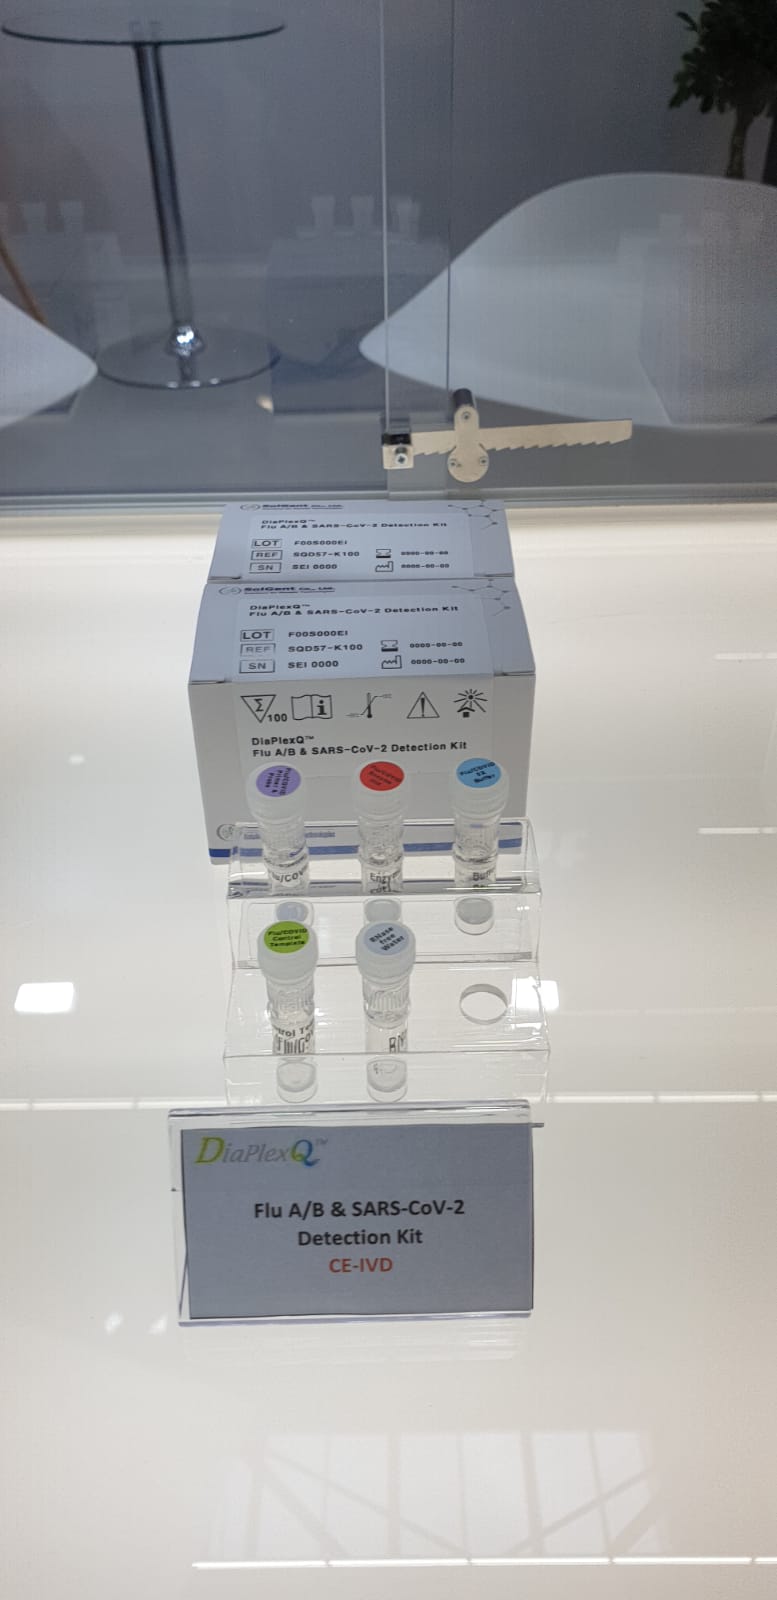 Flu A/B & SARS-CoV-2 Detection Kit